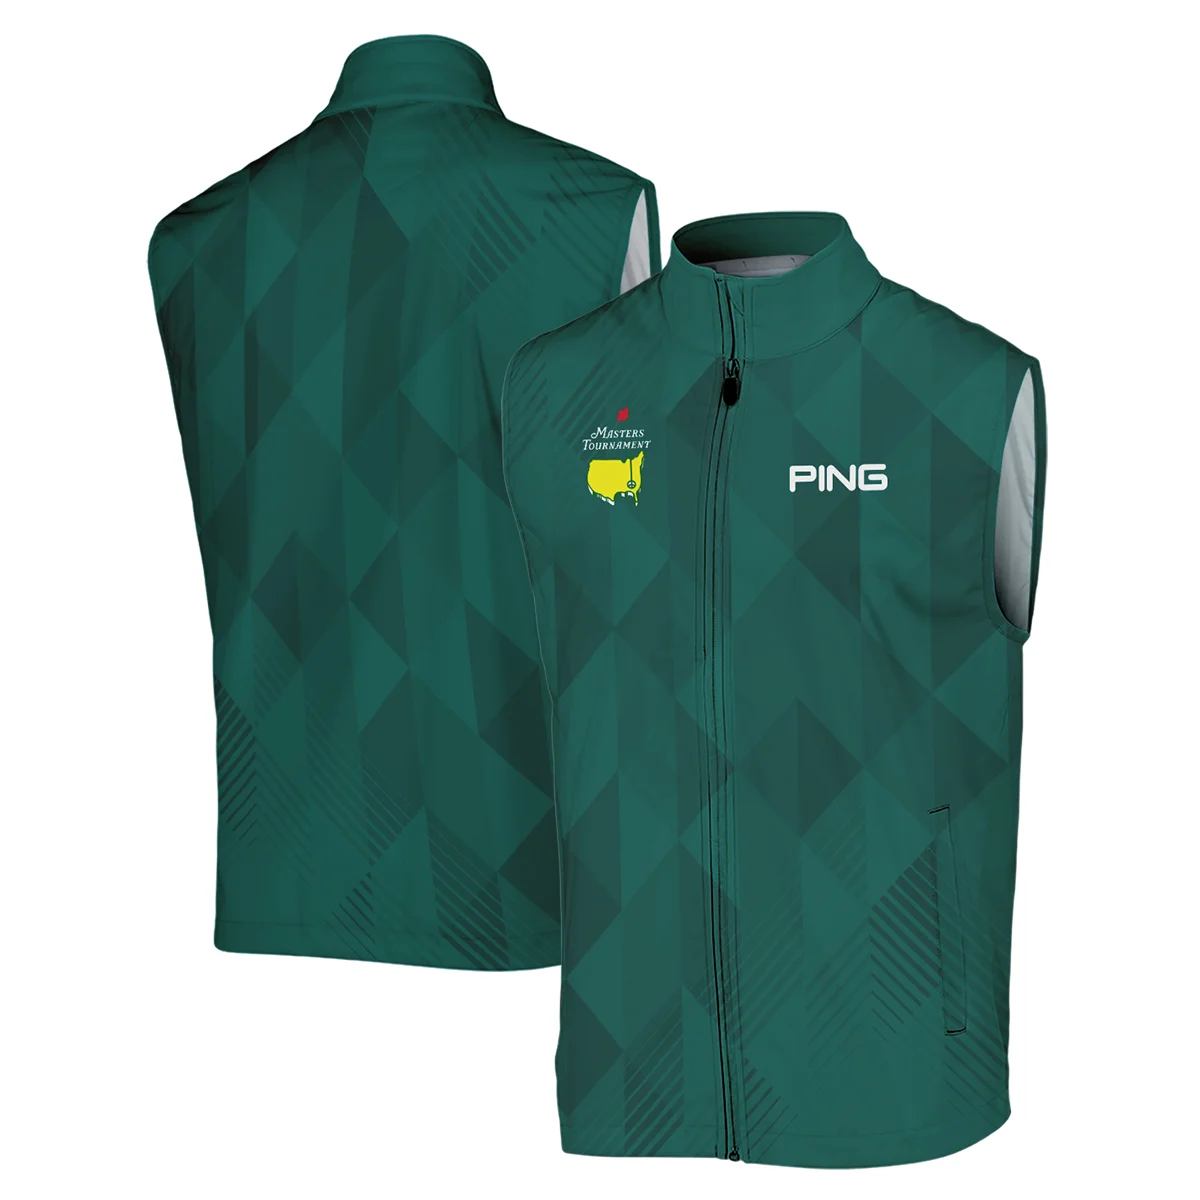 Masters Tournament Golf Sport Ping Sleeveless Jacket Sports Triangle Abstract Green Sleeveless Jacket